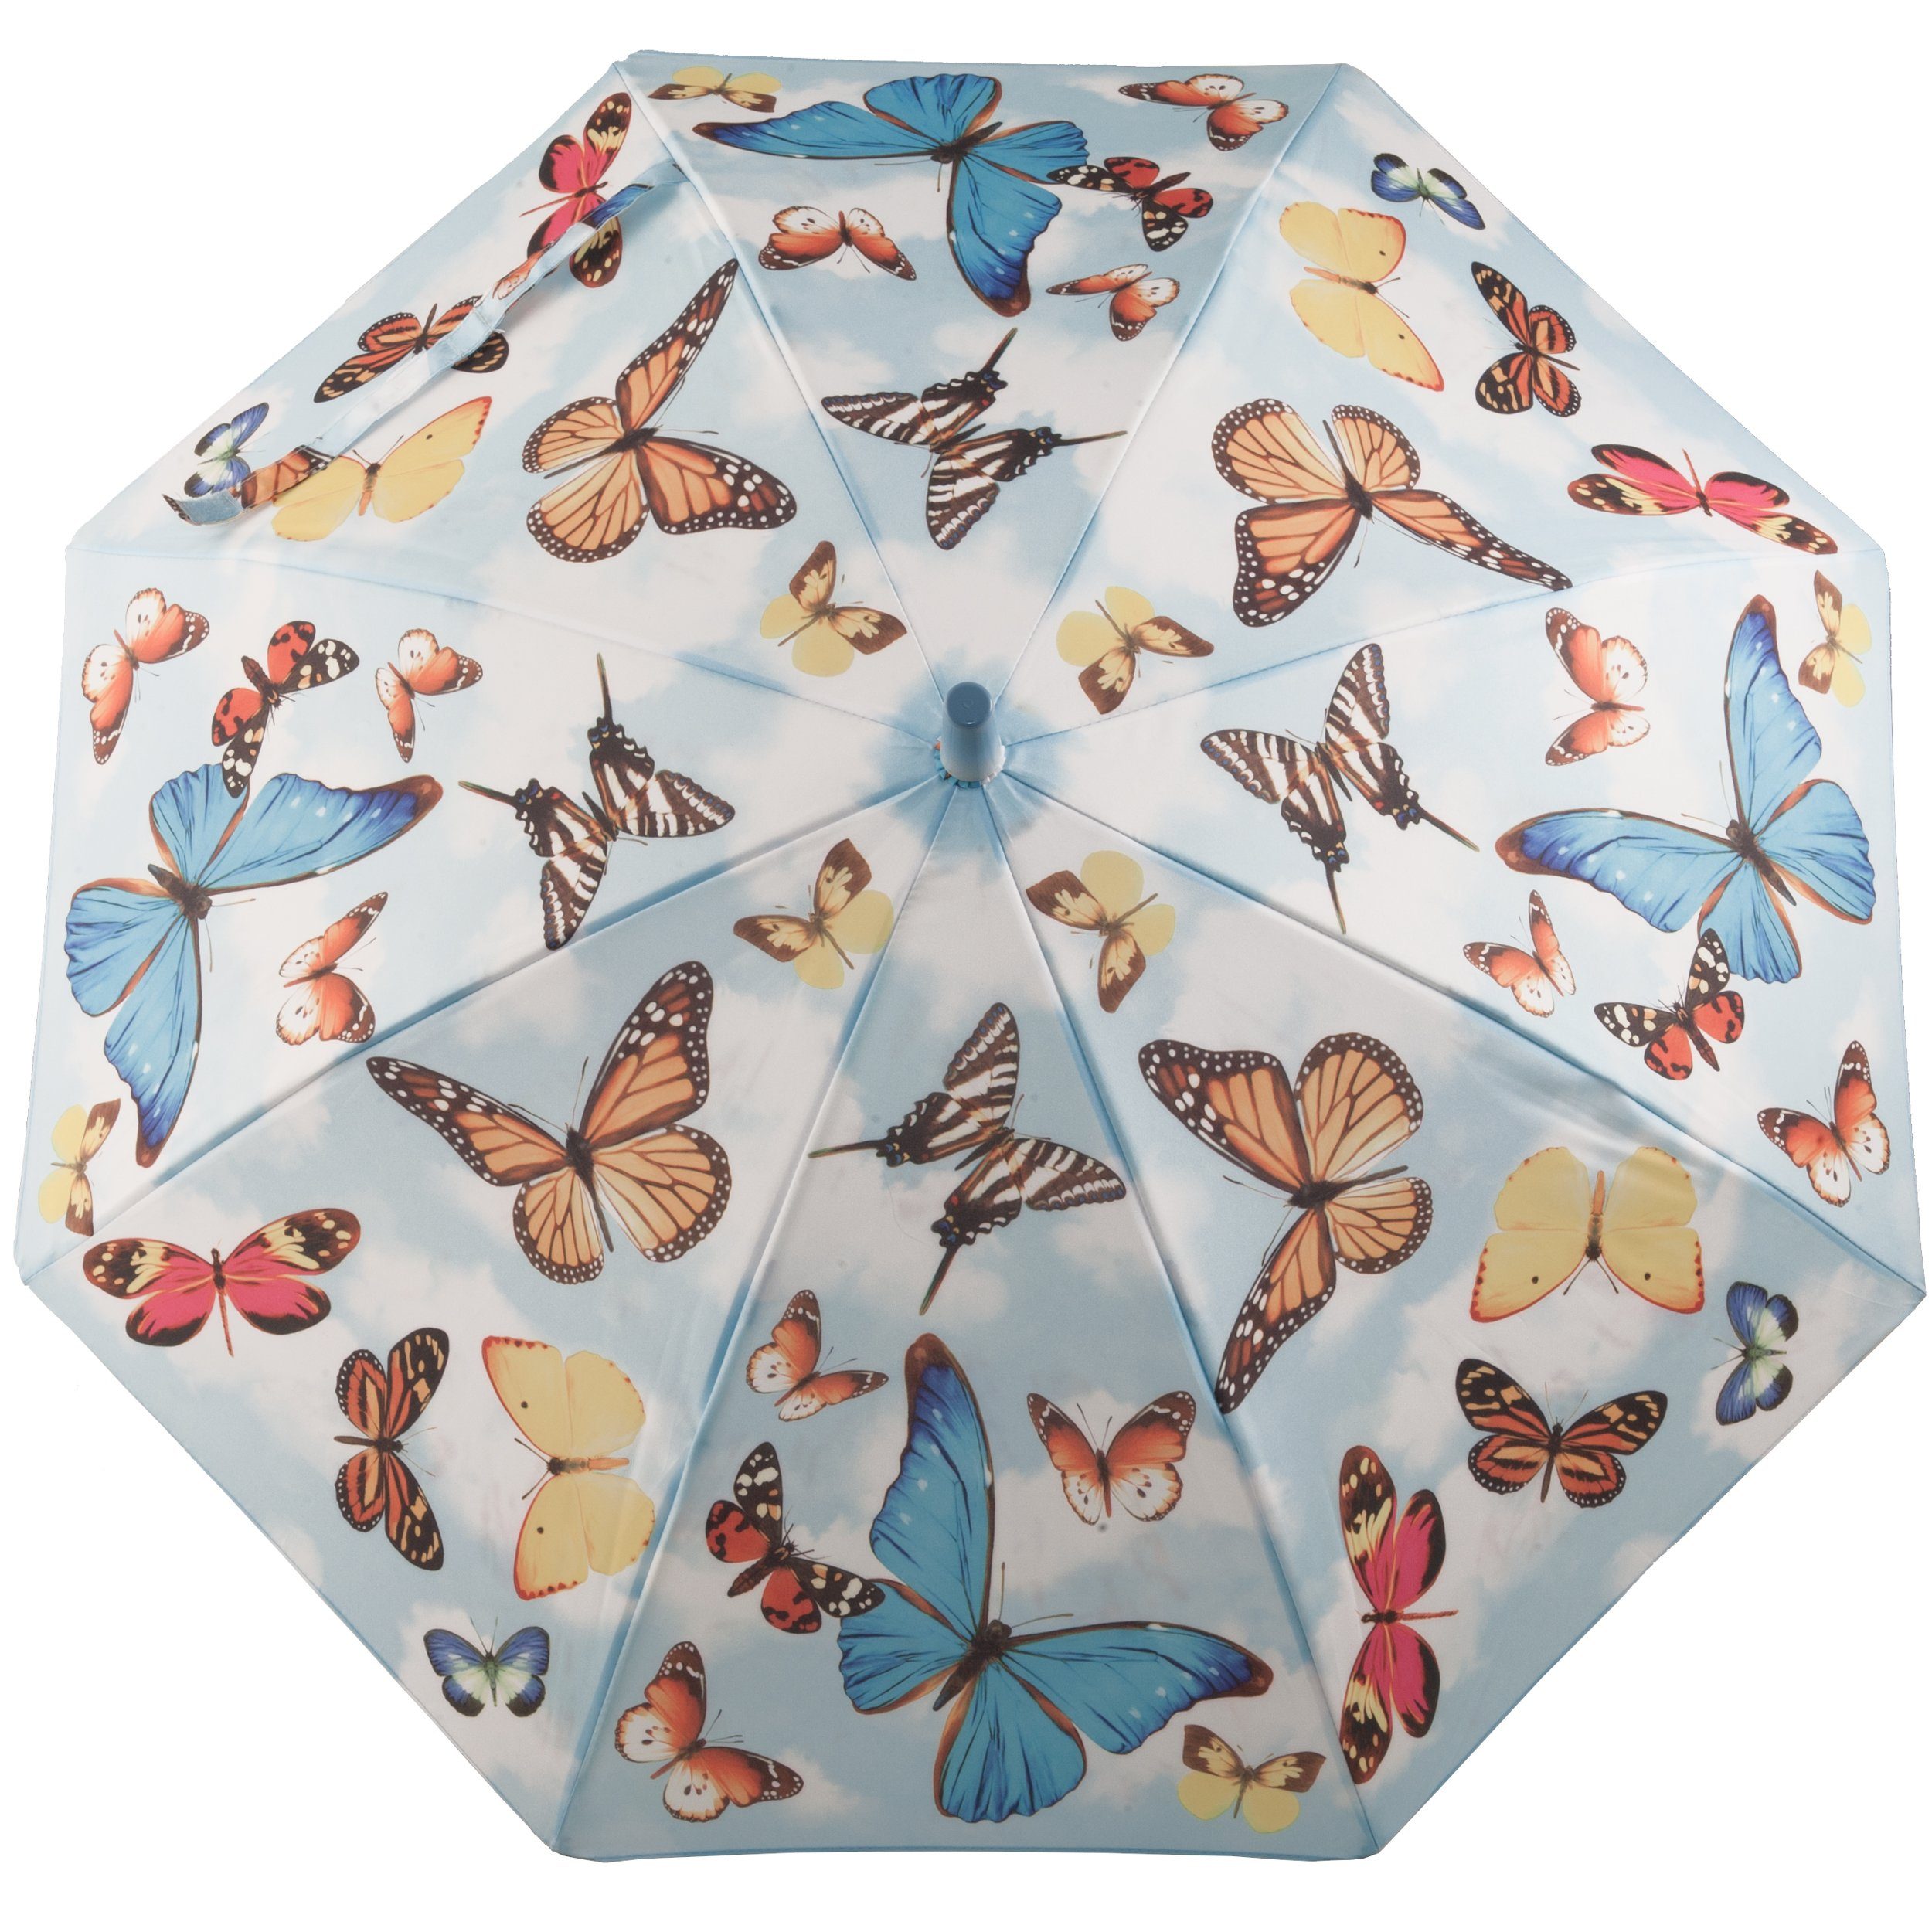 ROSEMARIE SCHULZ Stockregenschirm Mädchen Leichter Regenschirm Motiv Kinderschirm für Kinderschirm Schmetterlinge, Heidelberg